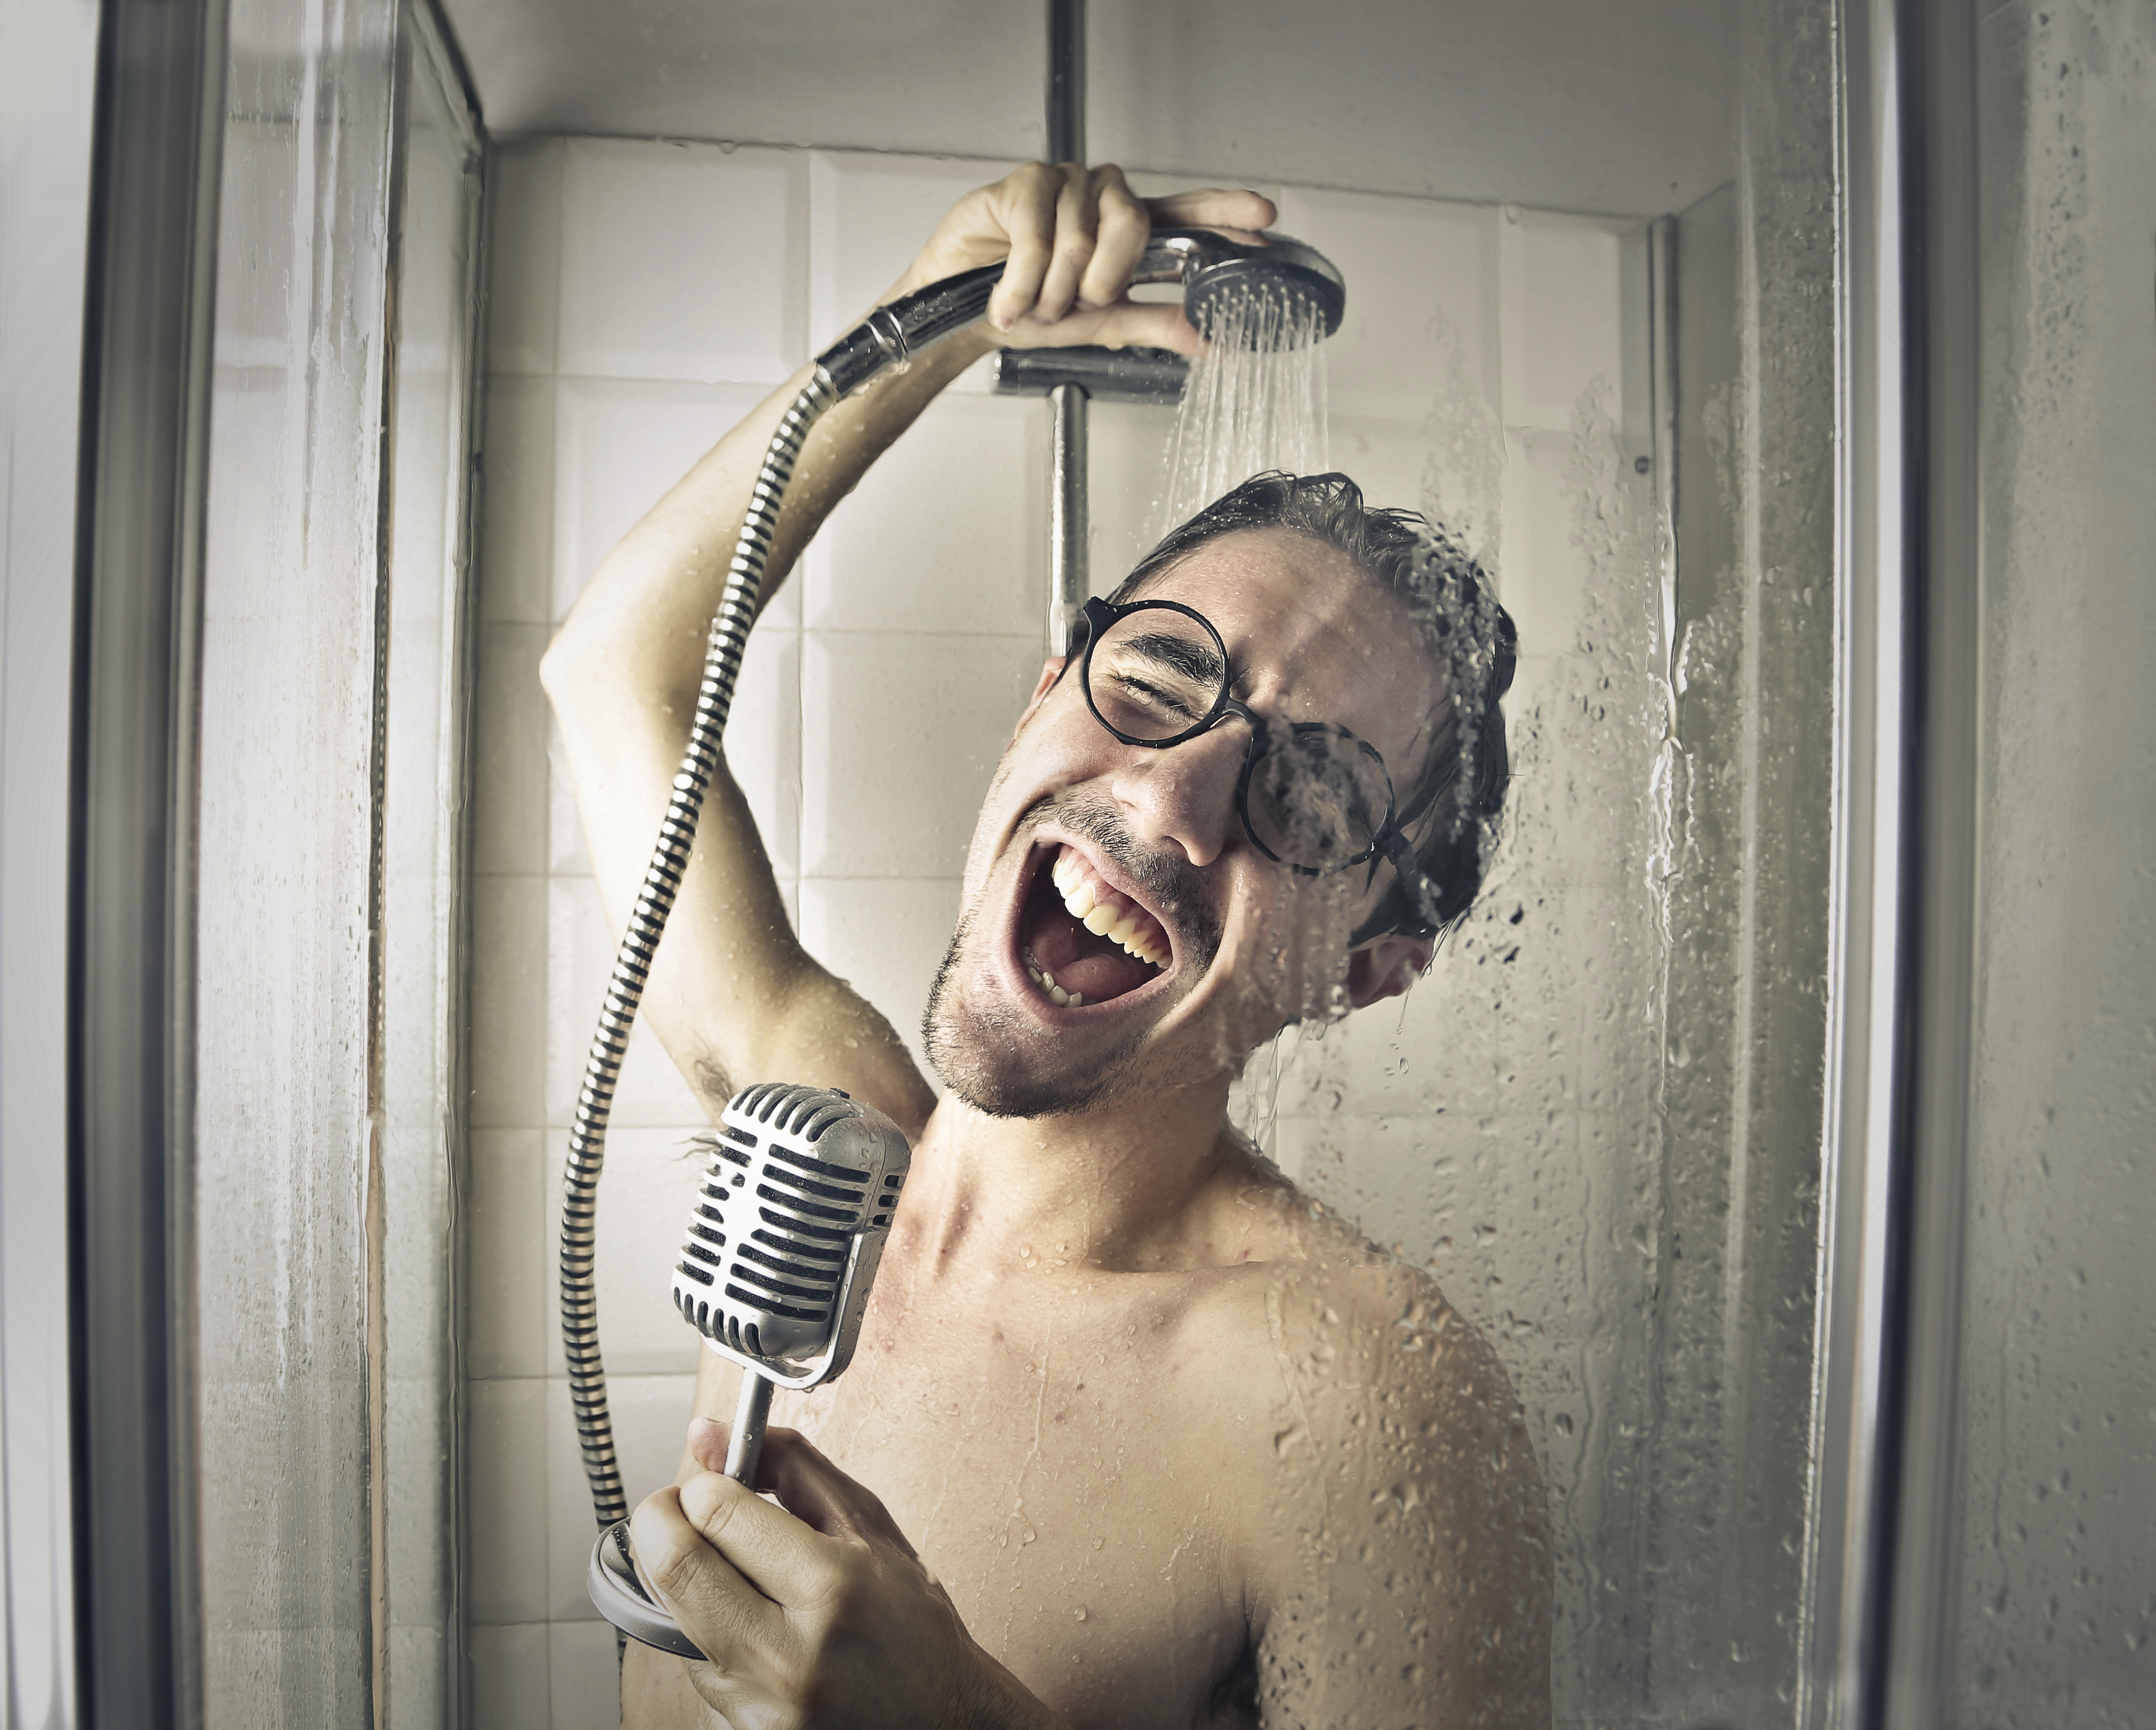 Showering